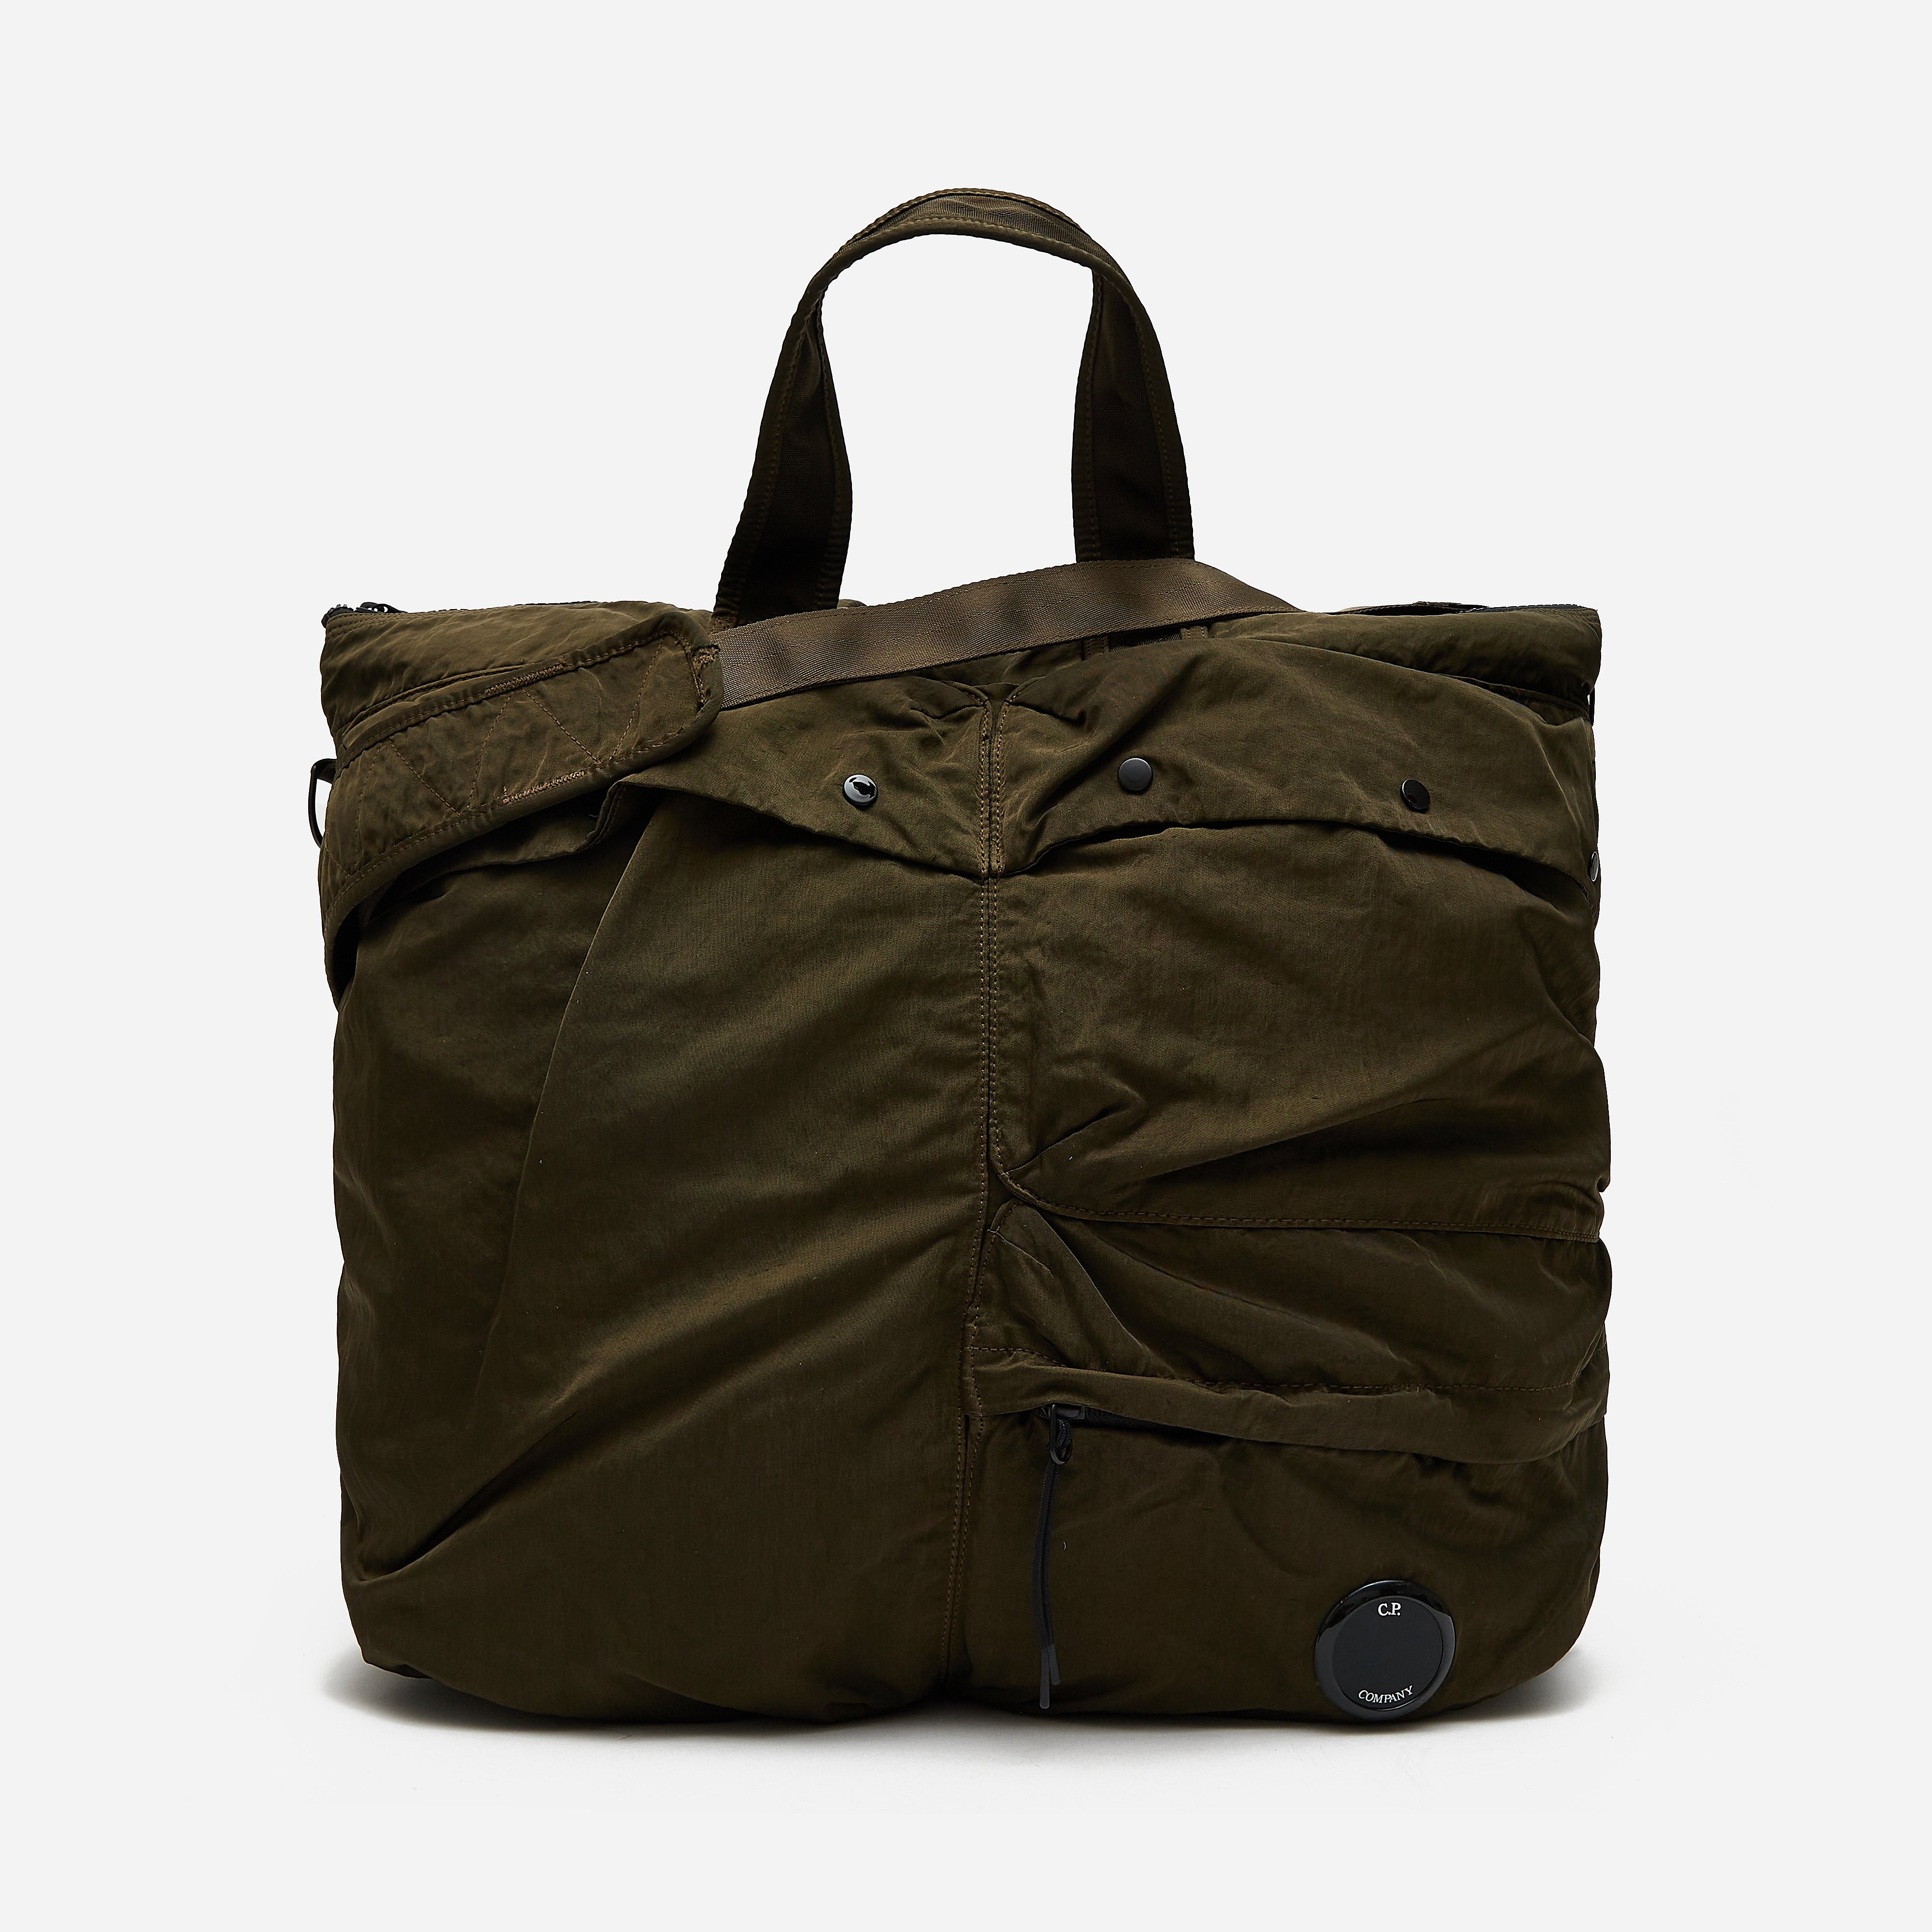 c.p. company nylon b tote bag, green